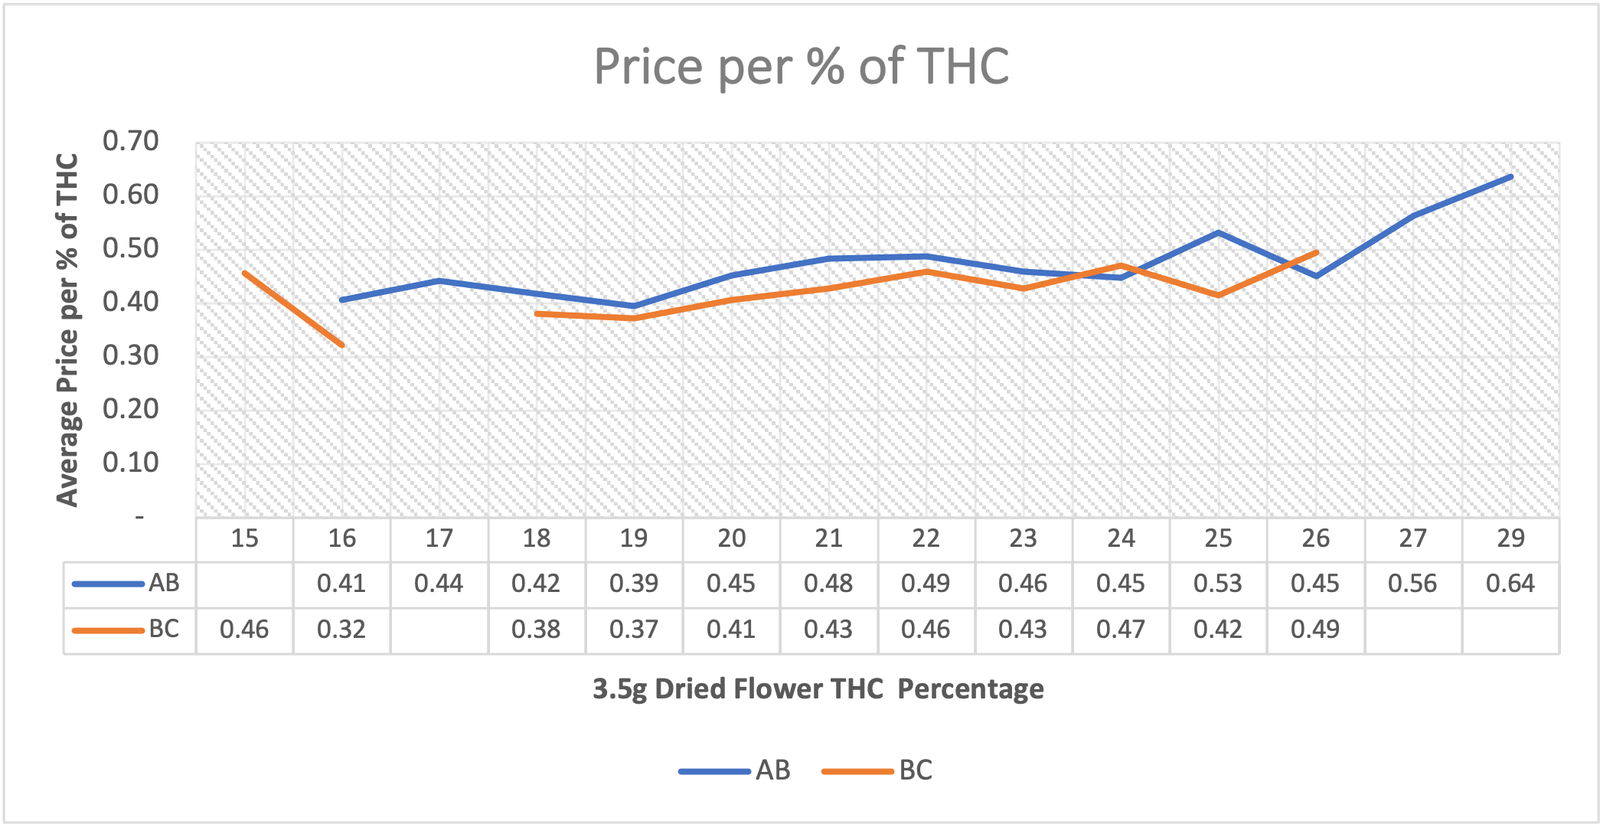 Price per % of THC